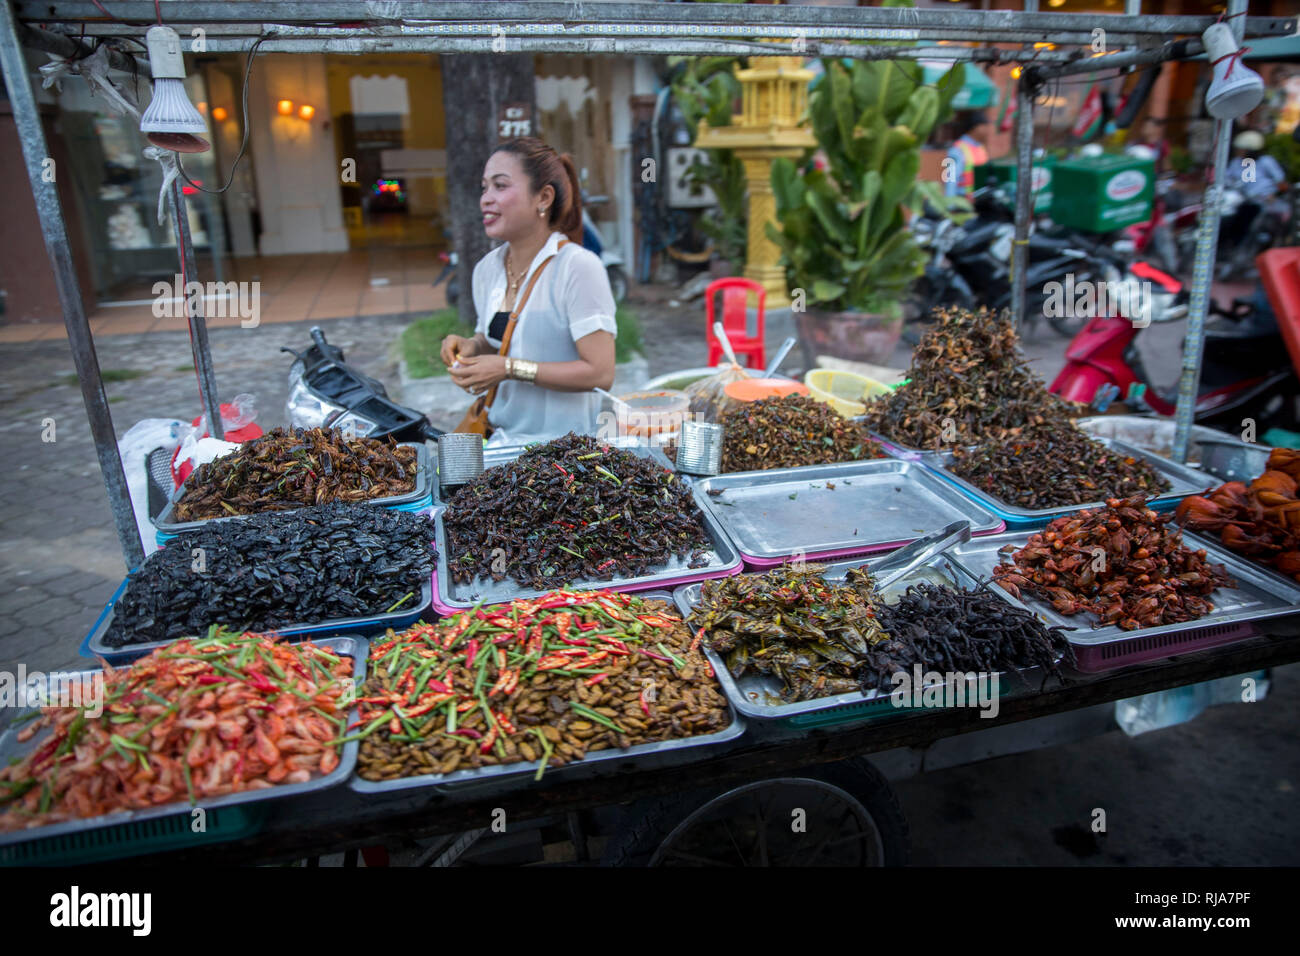 Kambodscha, Phnom Penh, Straßenszene, Verkaufsstand für geröstete Insekten, Spinnen, Kakerlaken, Larven, Würmer RSU. Foto Stock